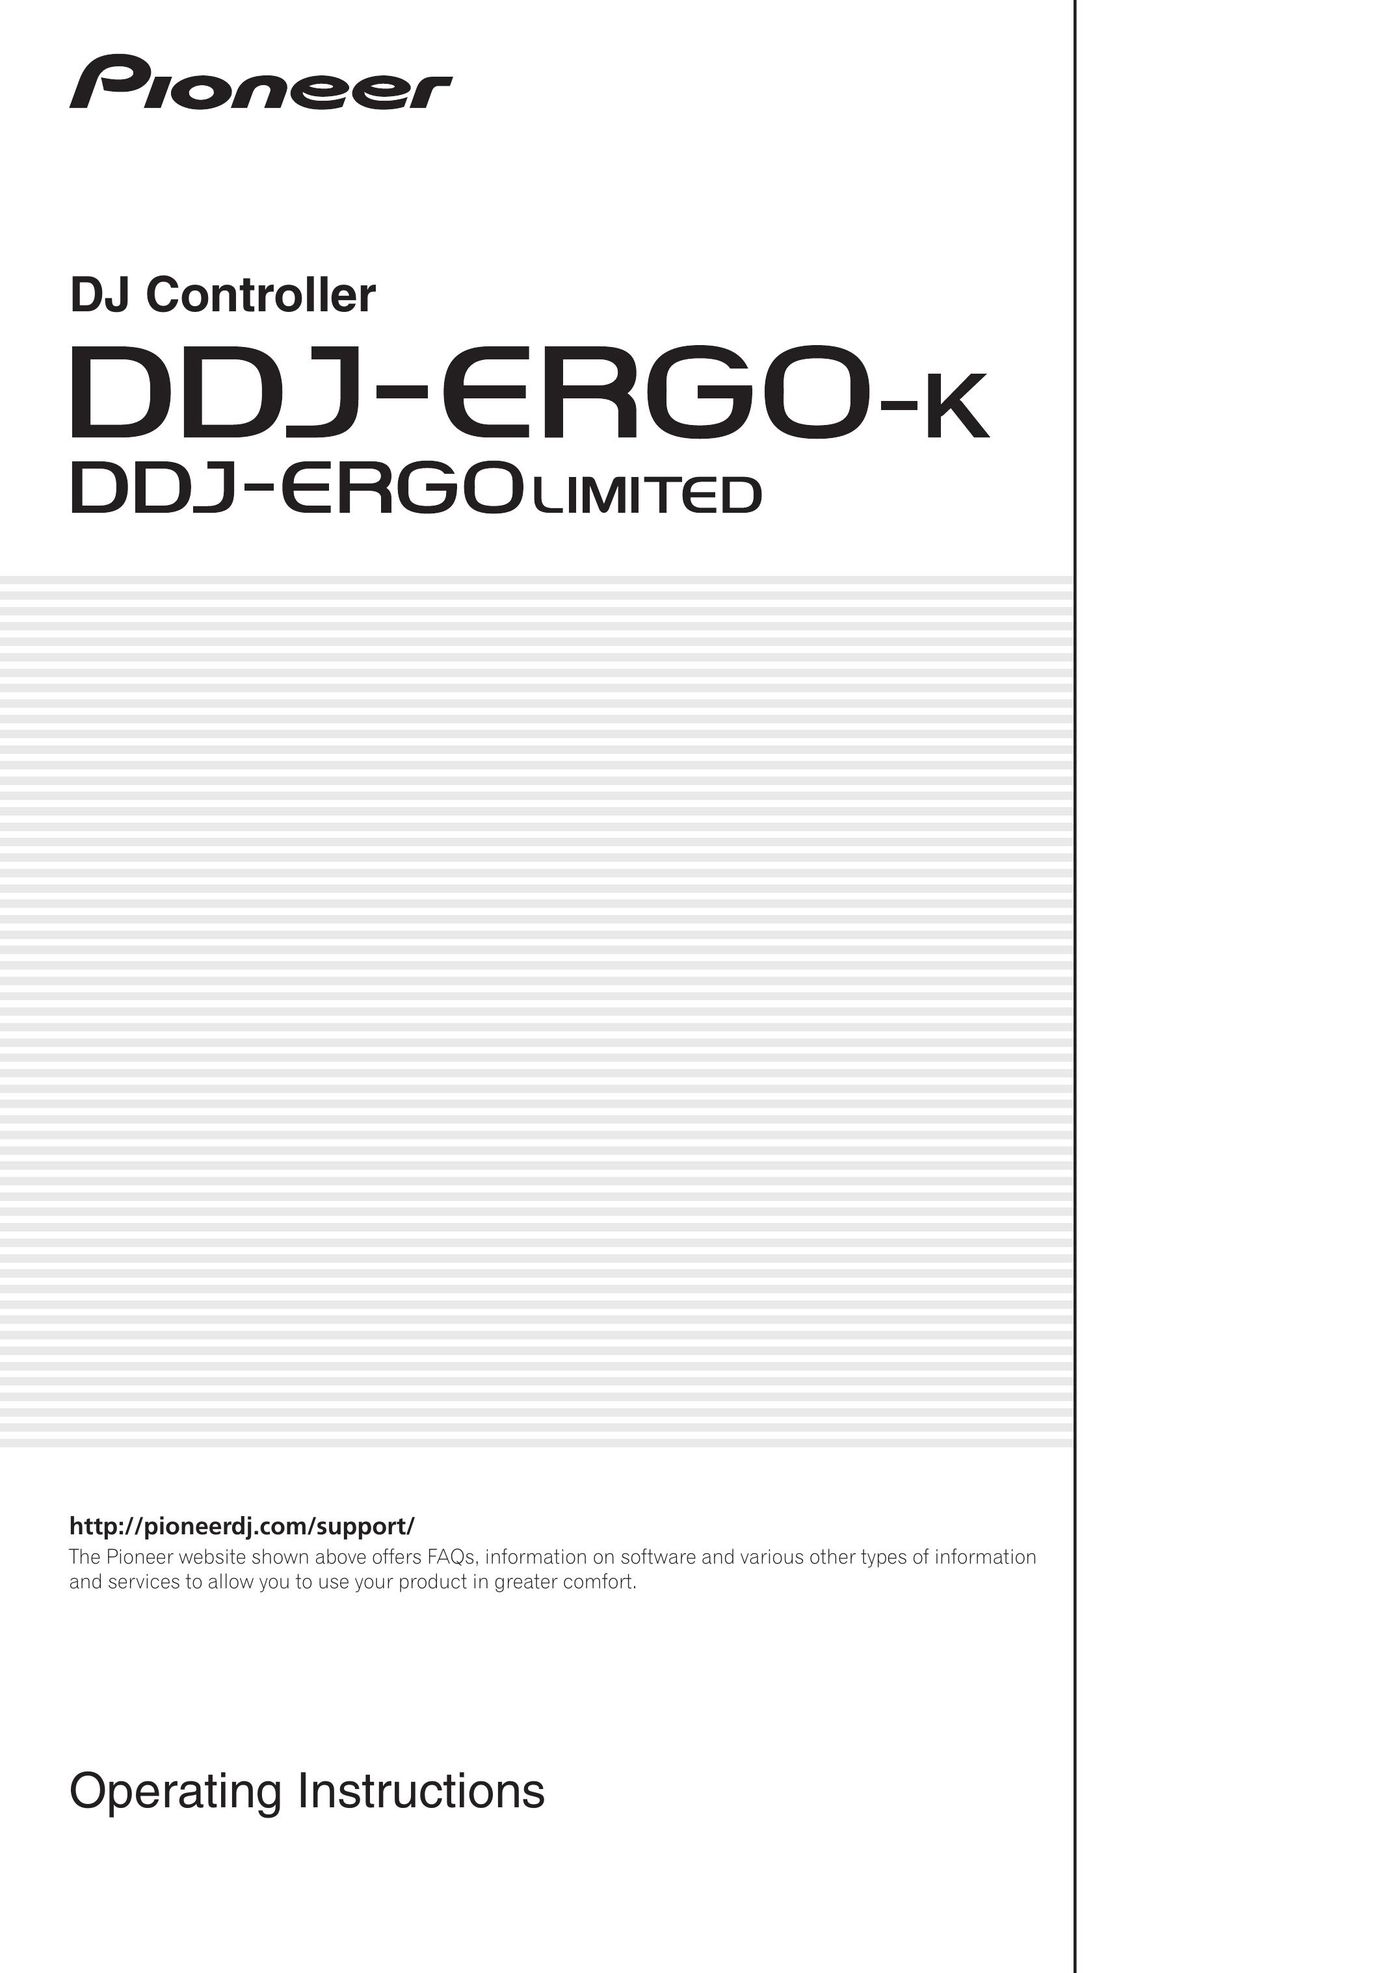 Pioneer DDJ-ERGO Musical Table User Manual